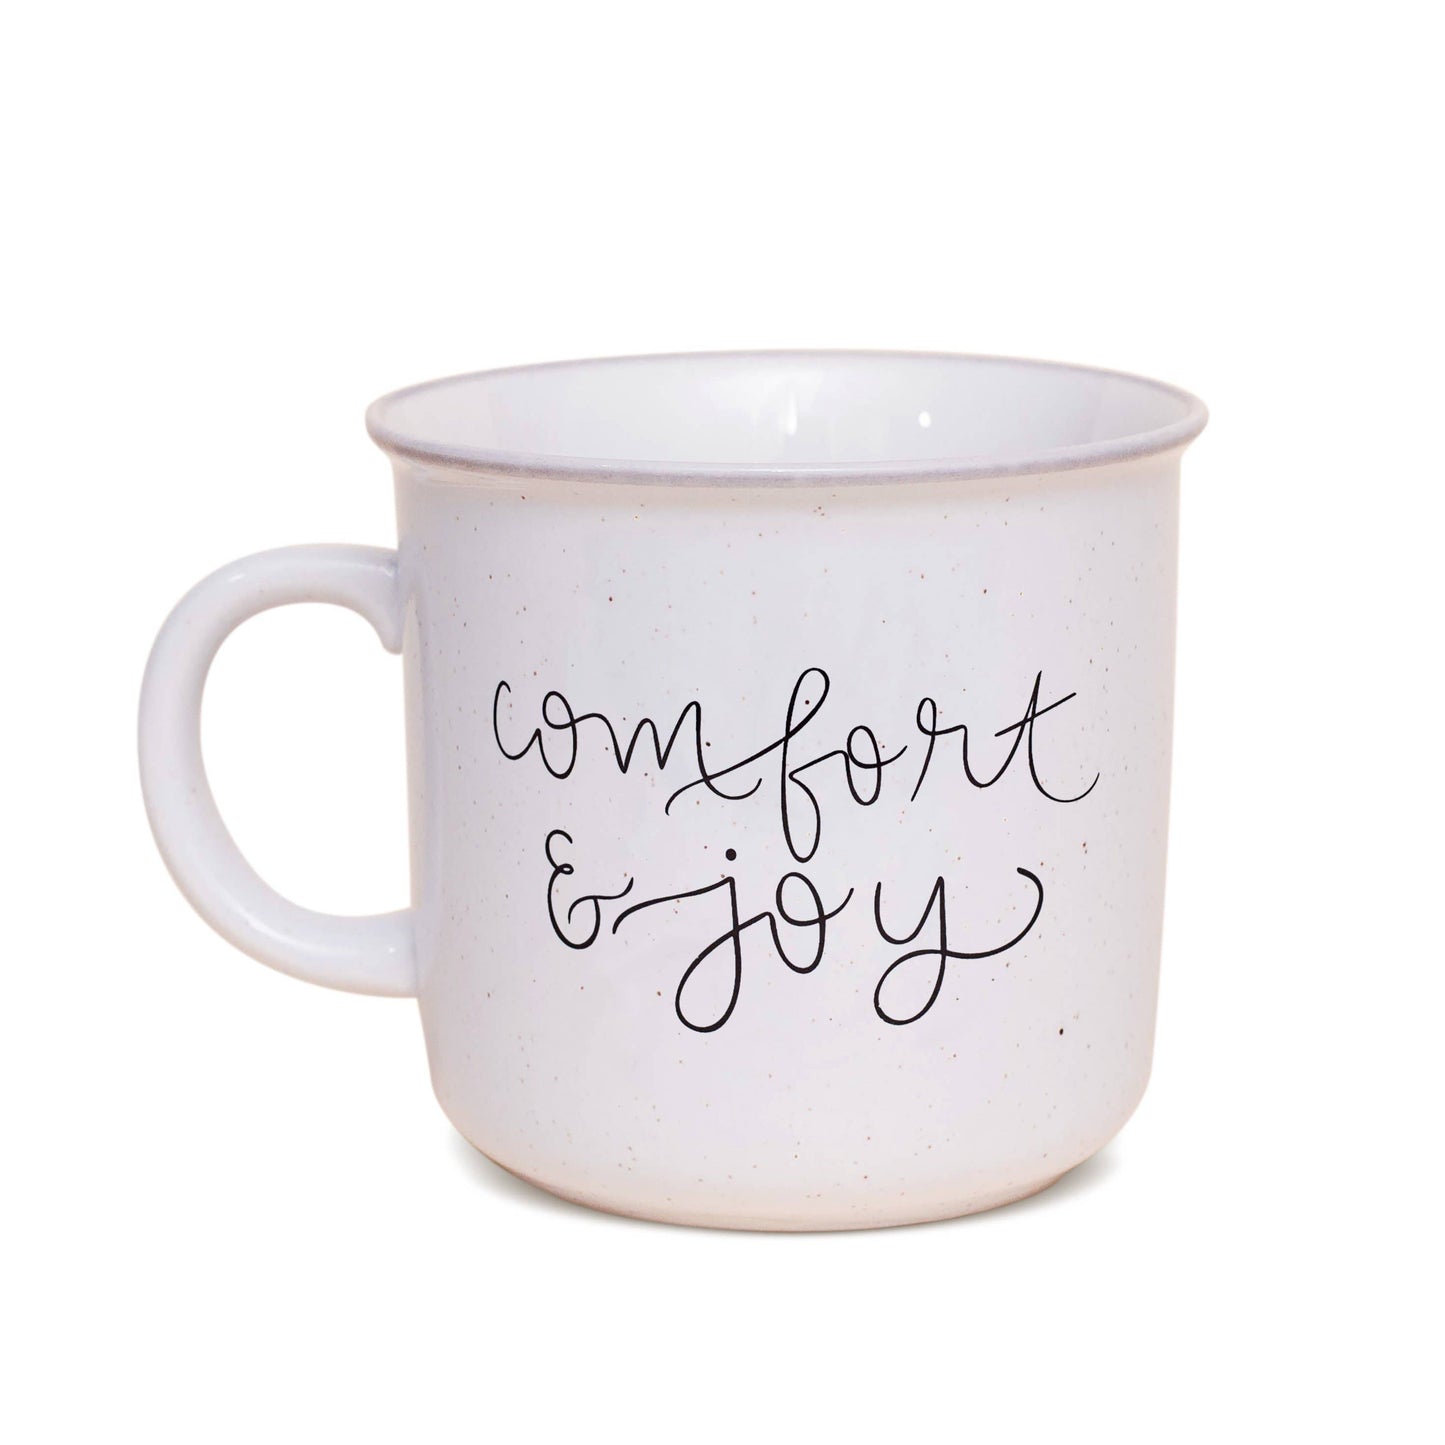 Comfort and Joy - Rustic Campfire Coffee Mug - 16 oz